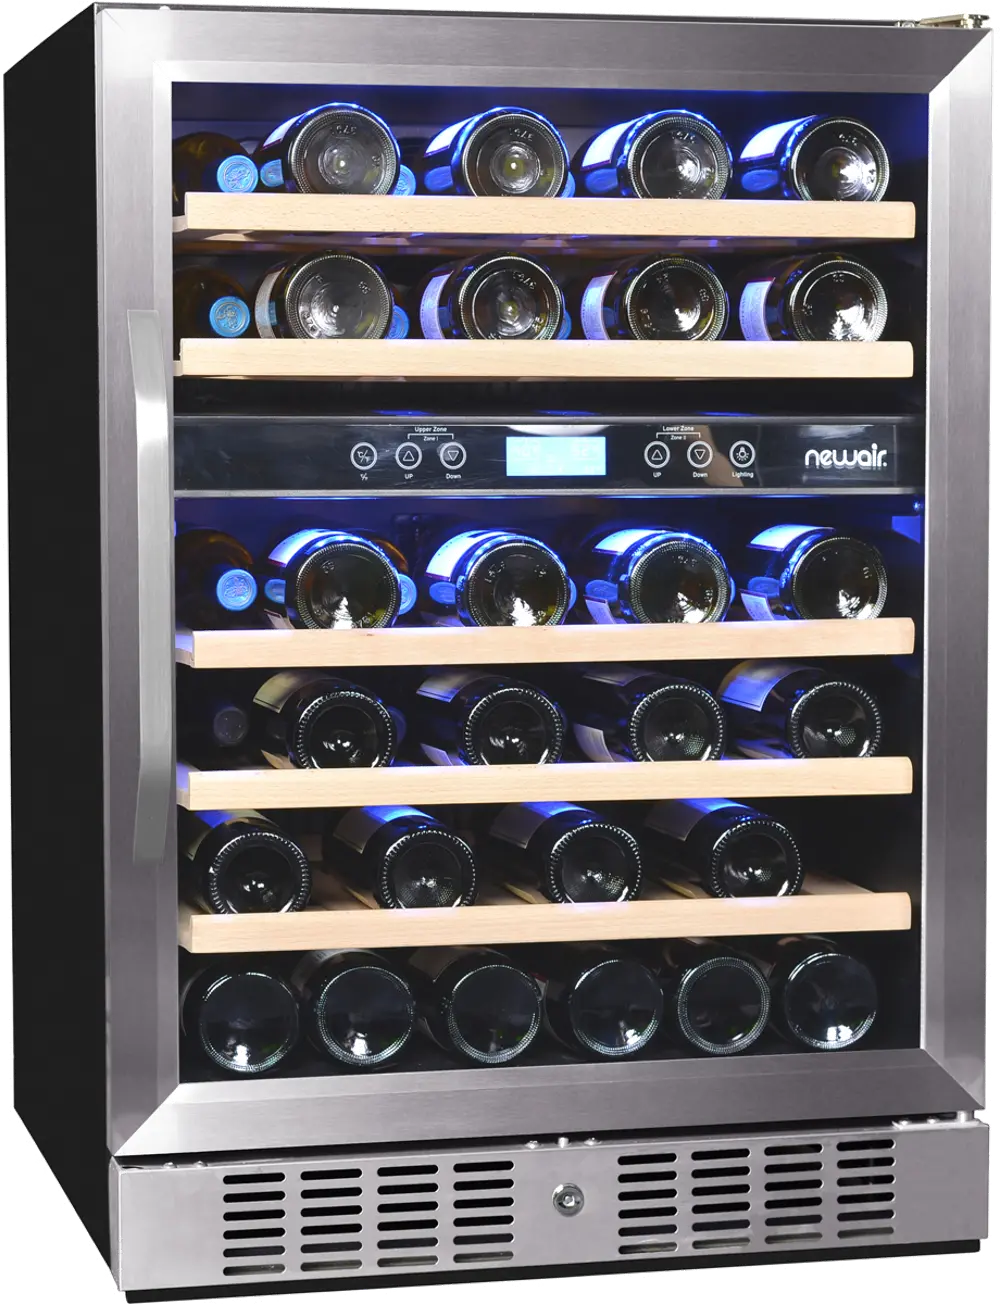 AWR-460DB Stainless Steel 46 Bottle Wine Cooler-1